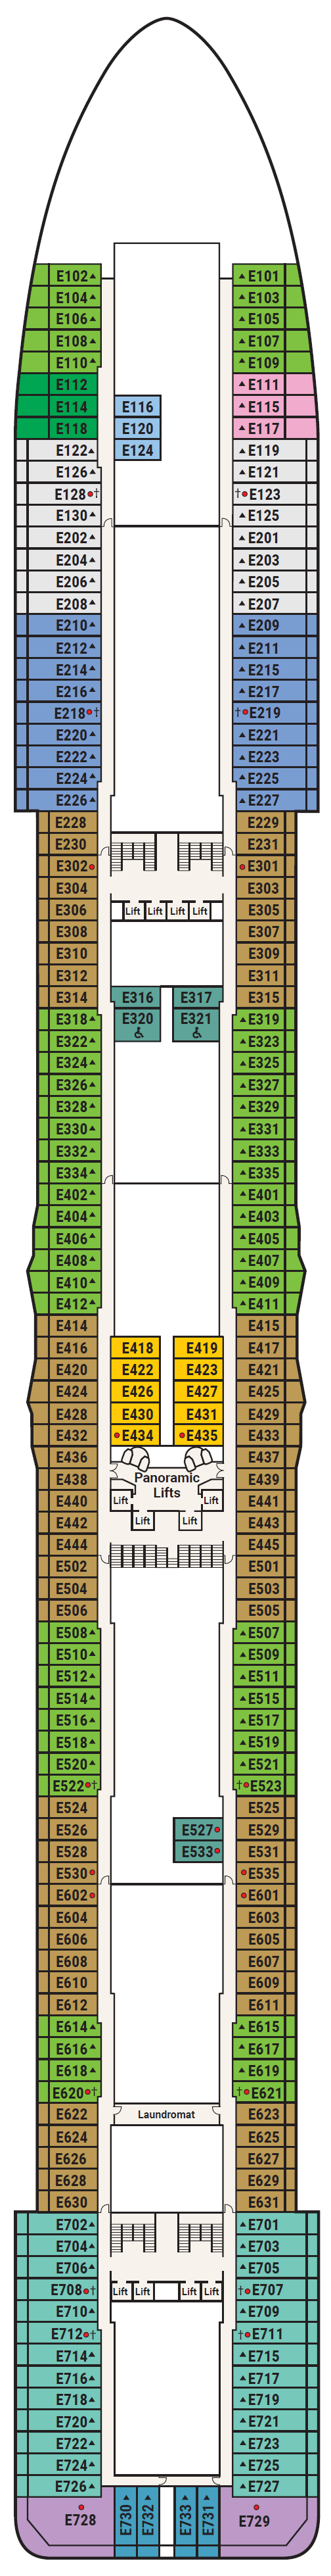 Deck 8 - Emerald